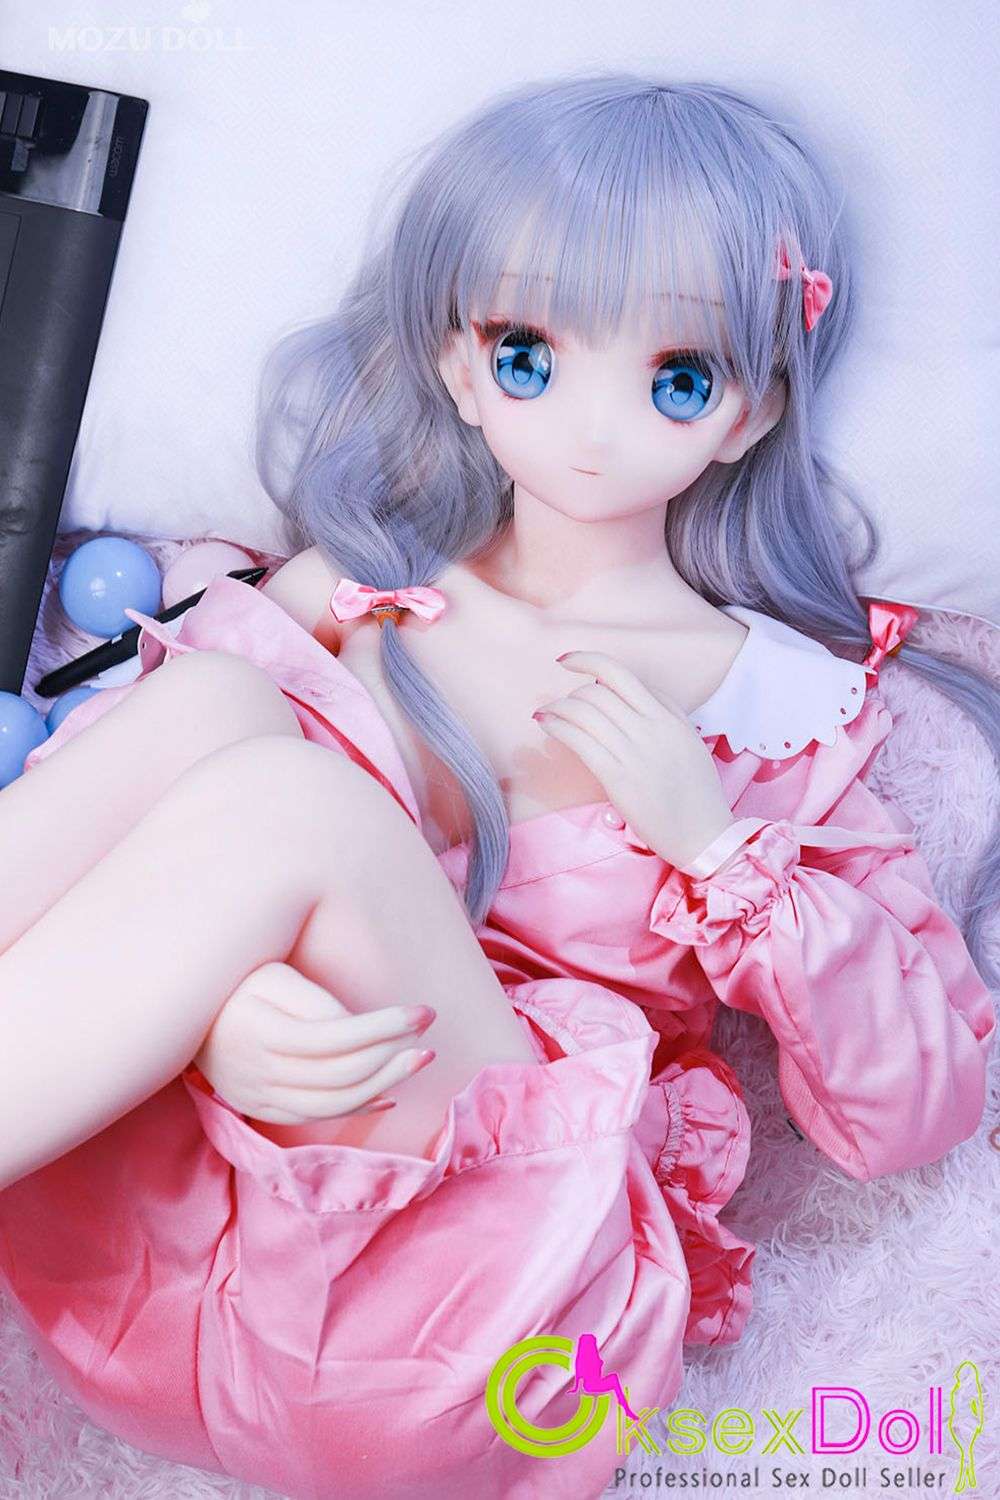 Mini Sex Doll Anime Pic of 『Namika』